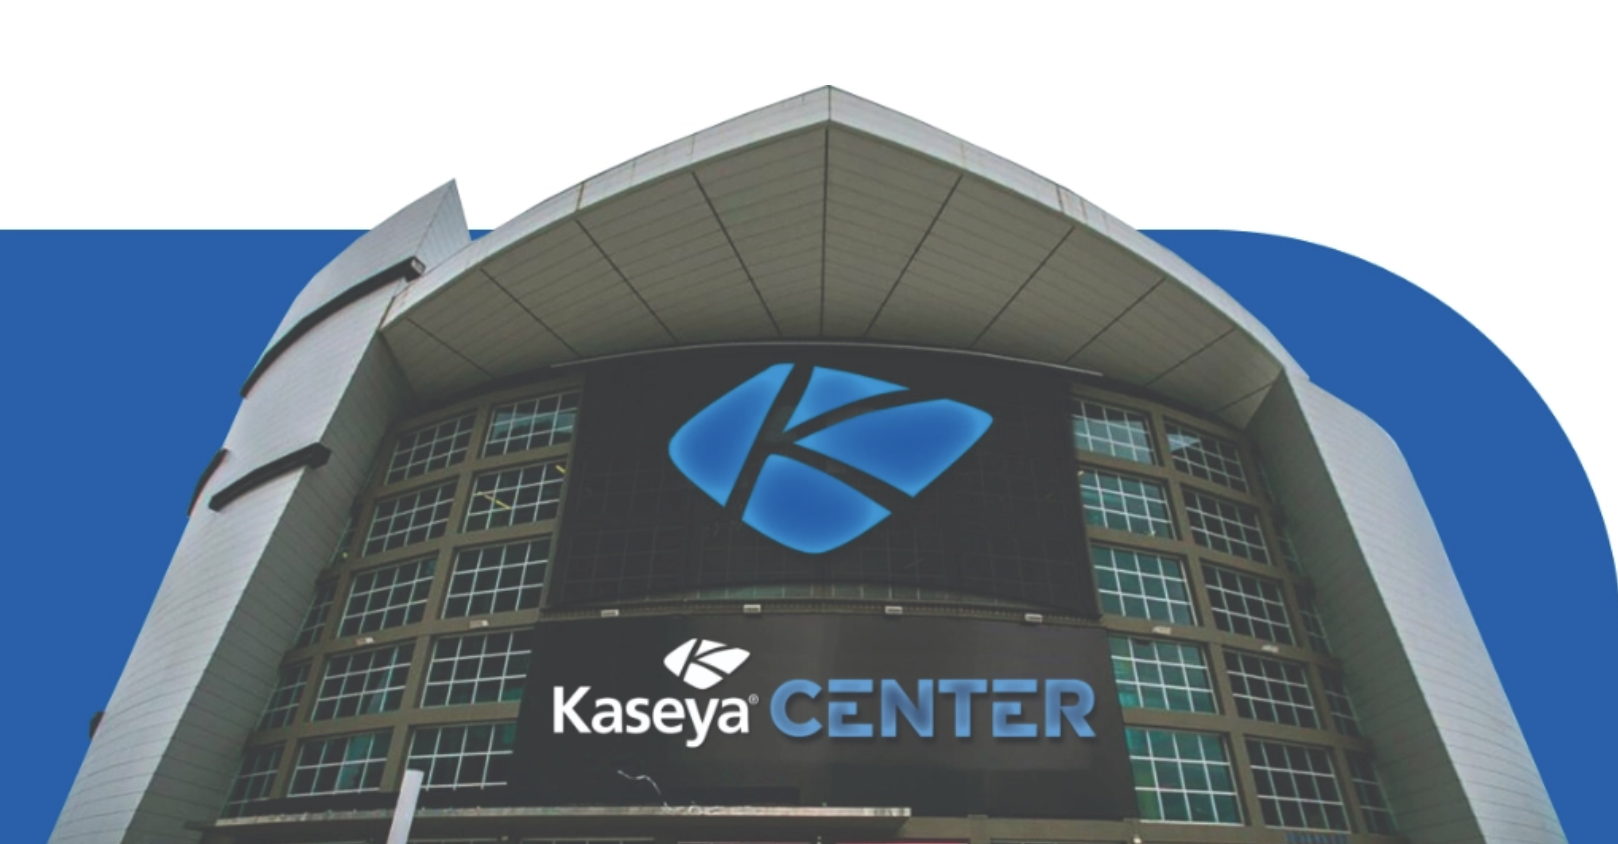 Miami Heat Arena to be Renamed Kaseya Center EDMTunes